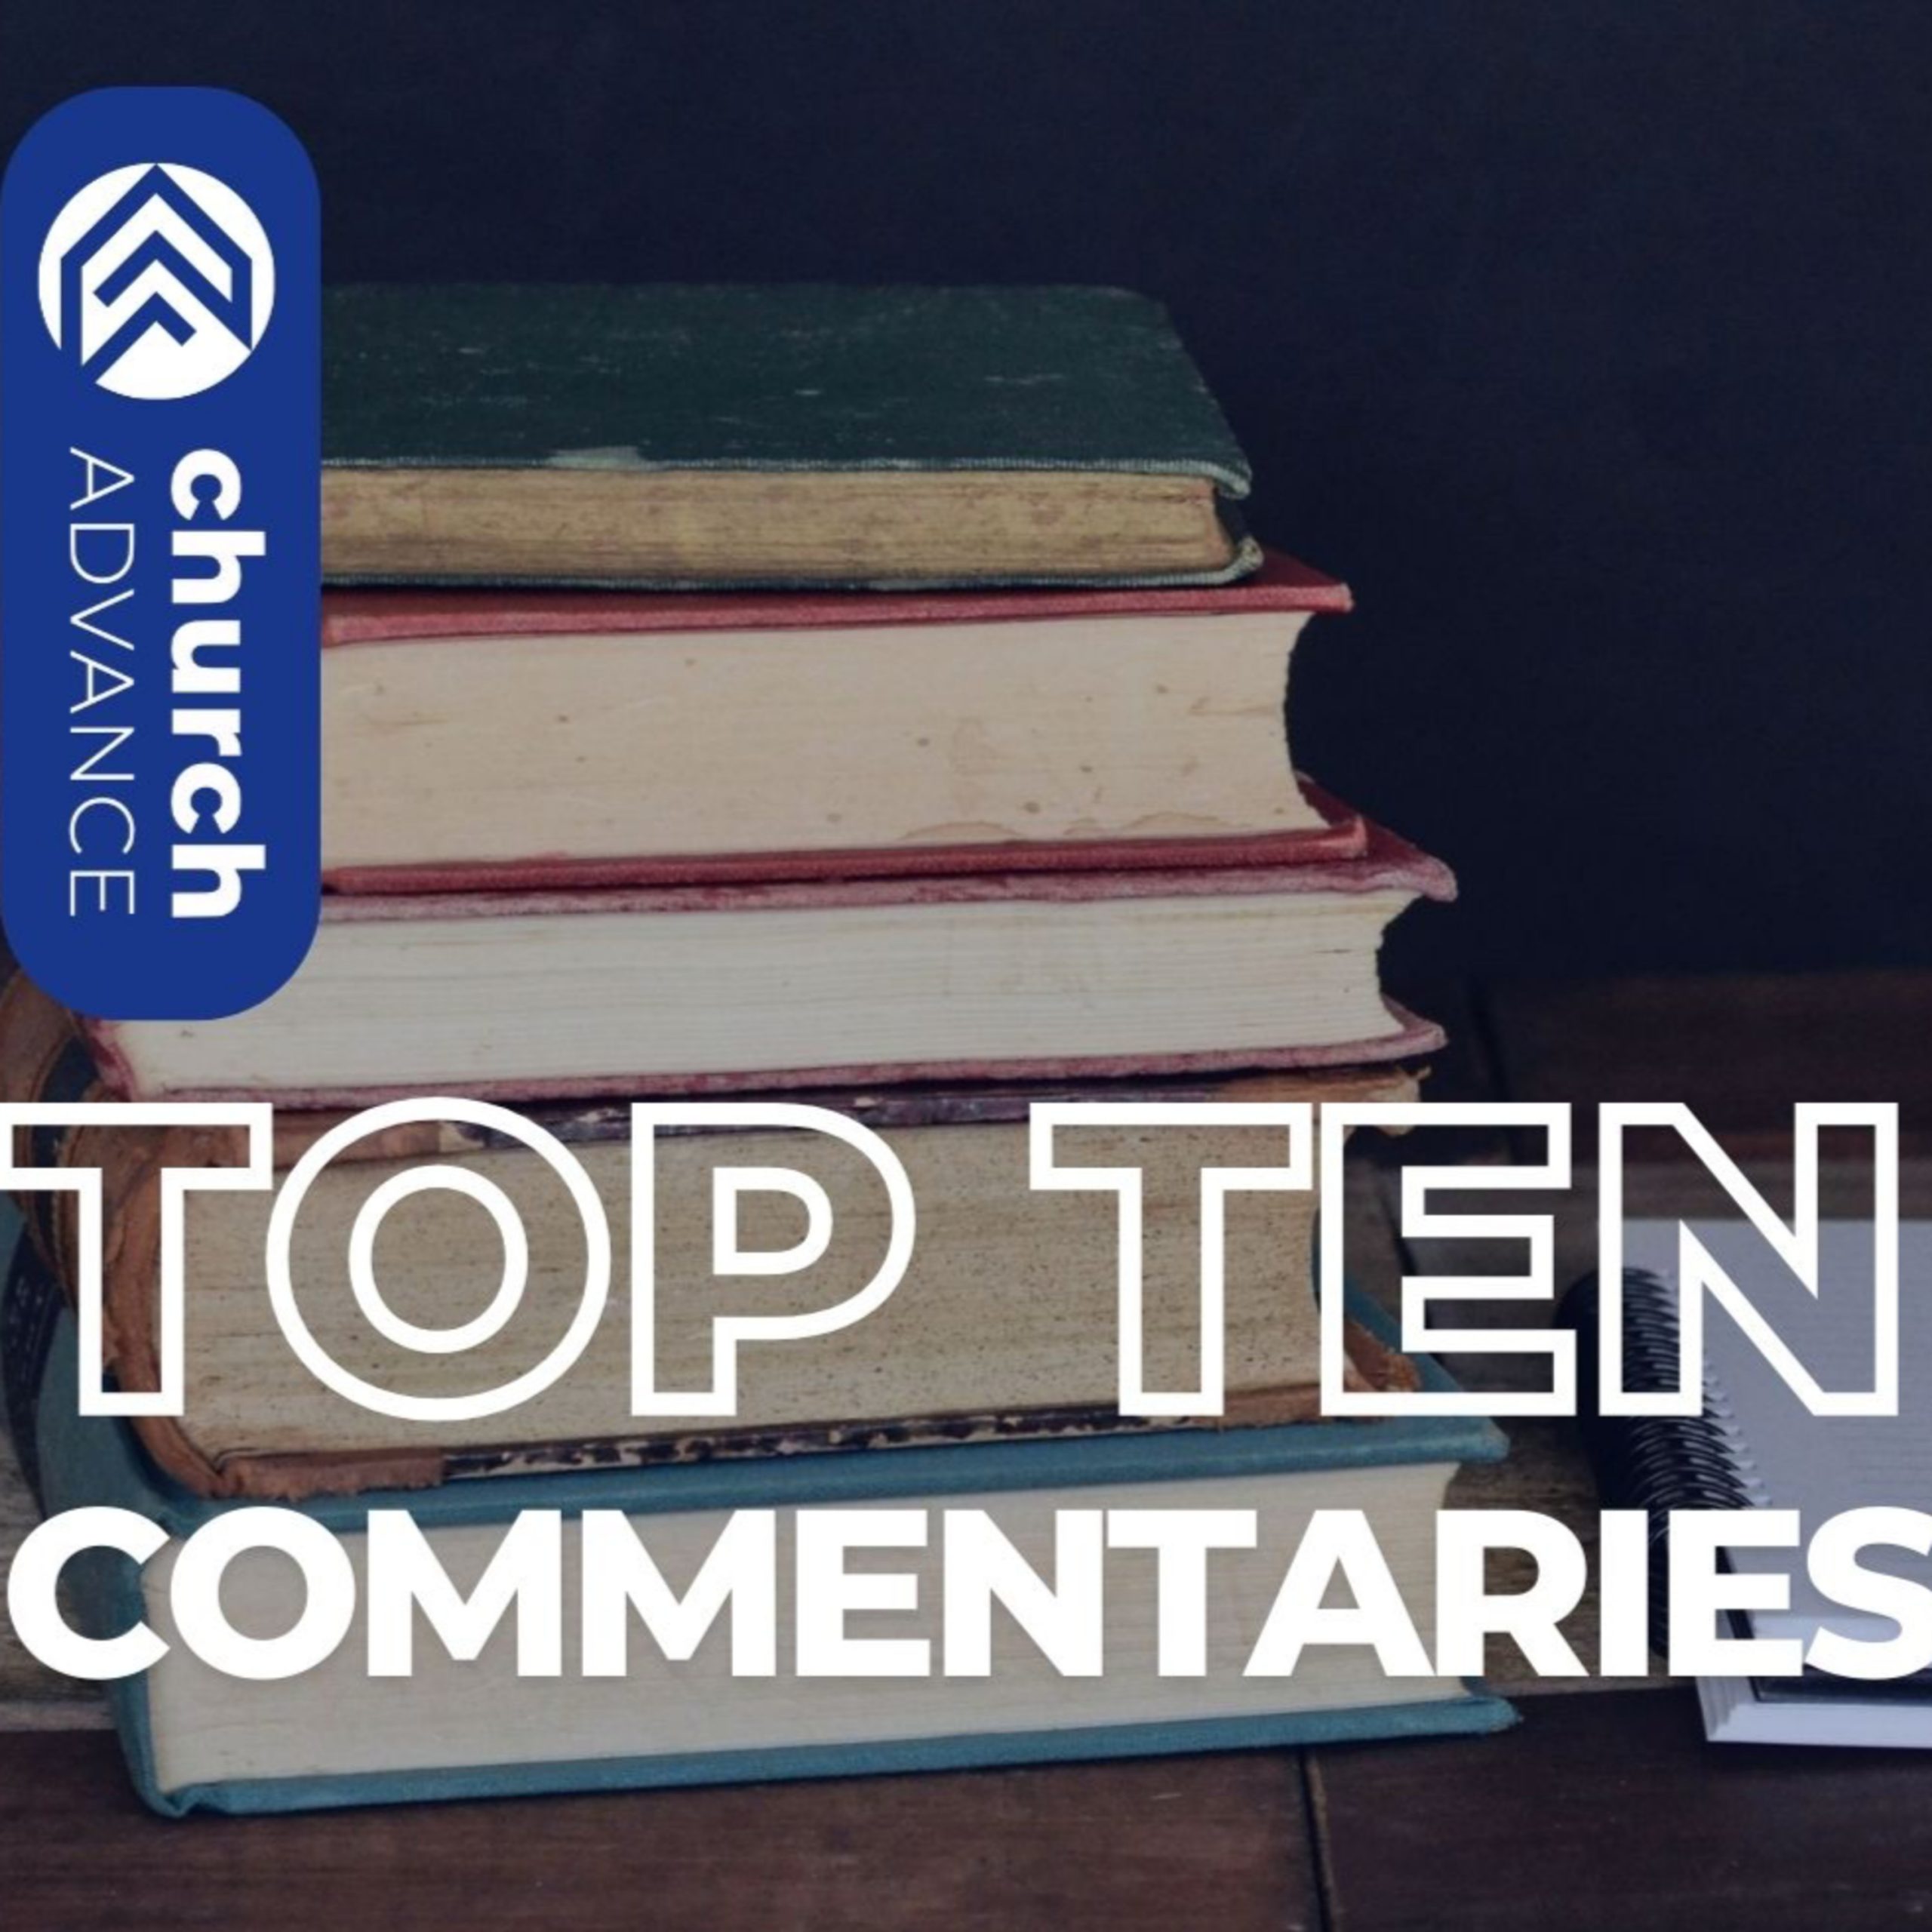 Top Ten Commentary Series